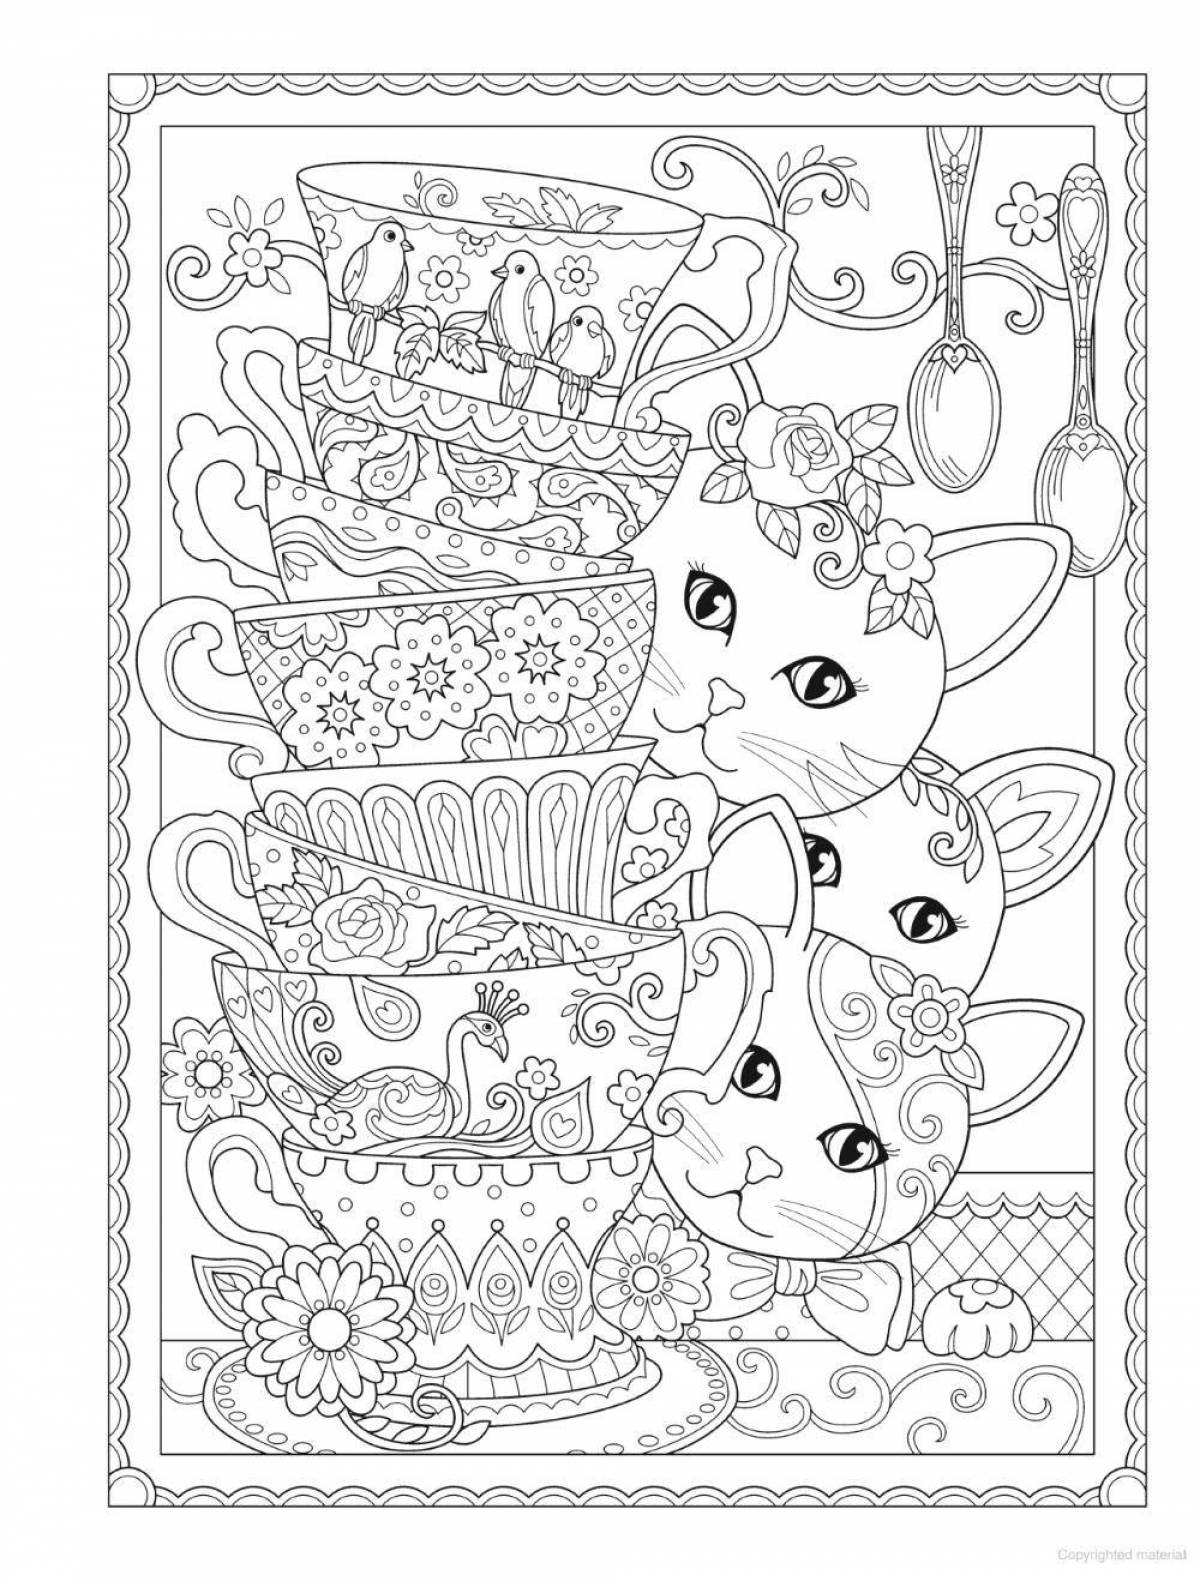 Joyful anti-stress coloring book for cat girls